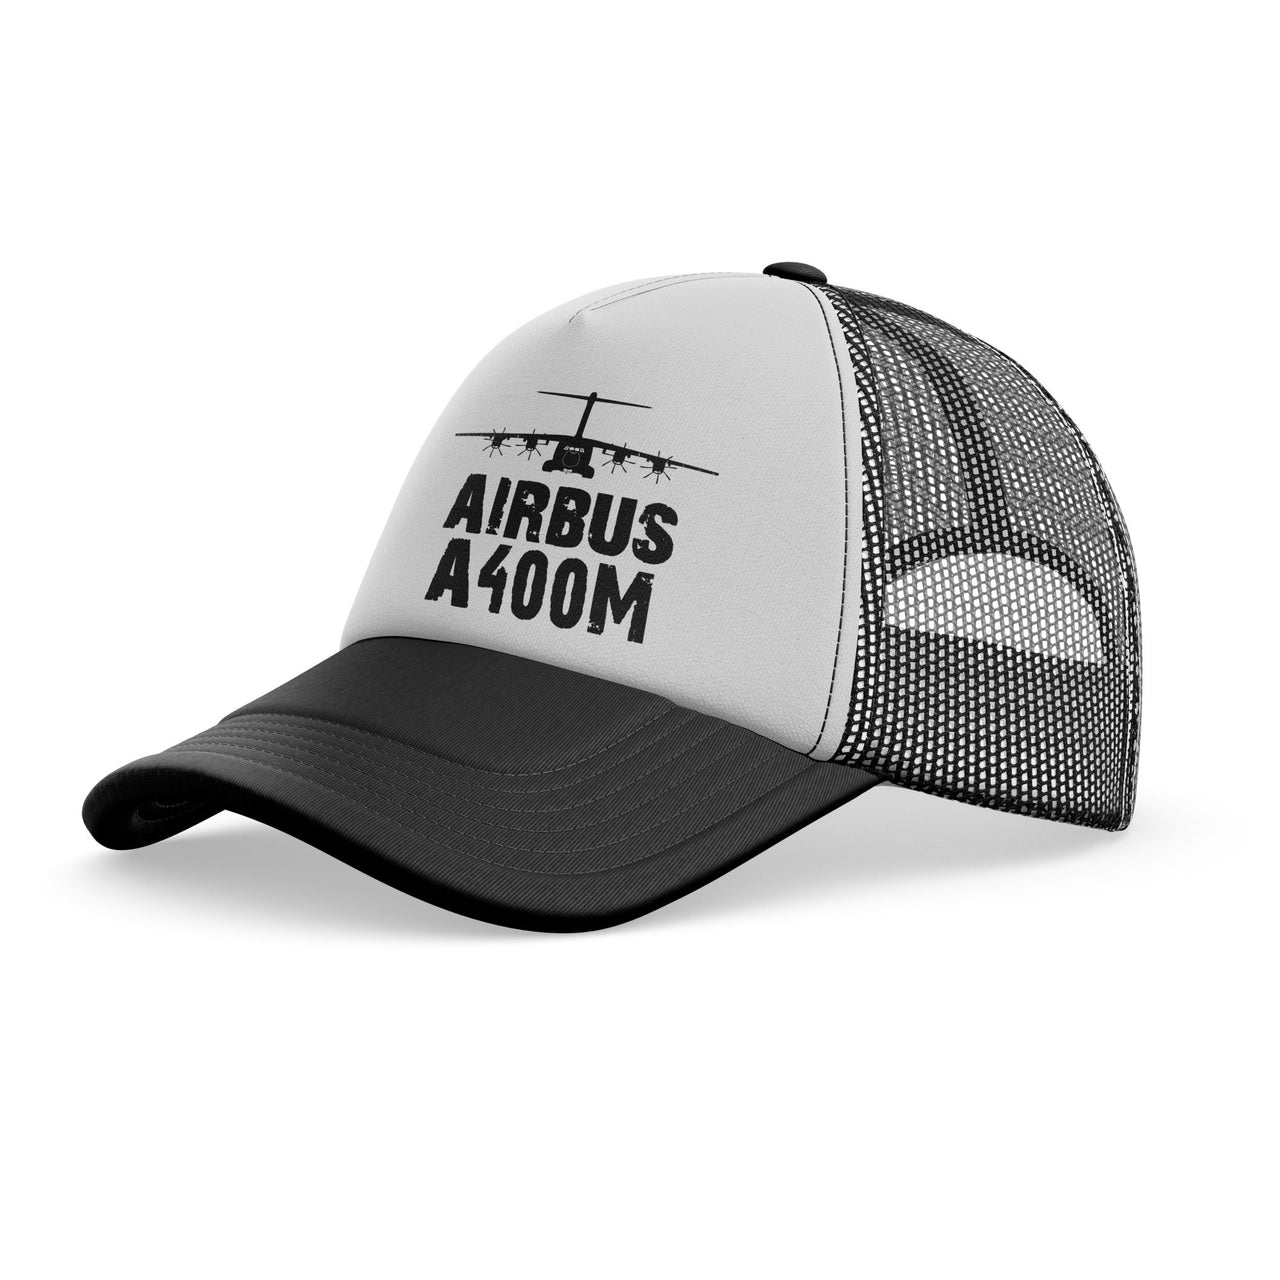 Airbus A400M & Plane Designed Trucker Caps & Hats